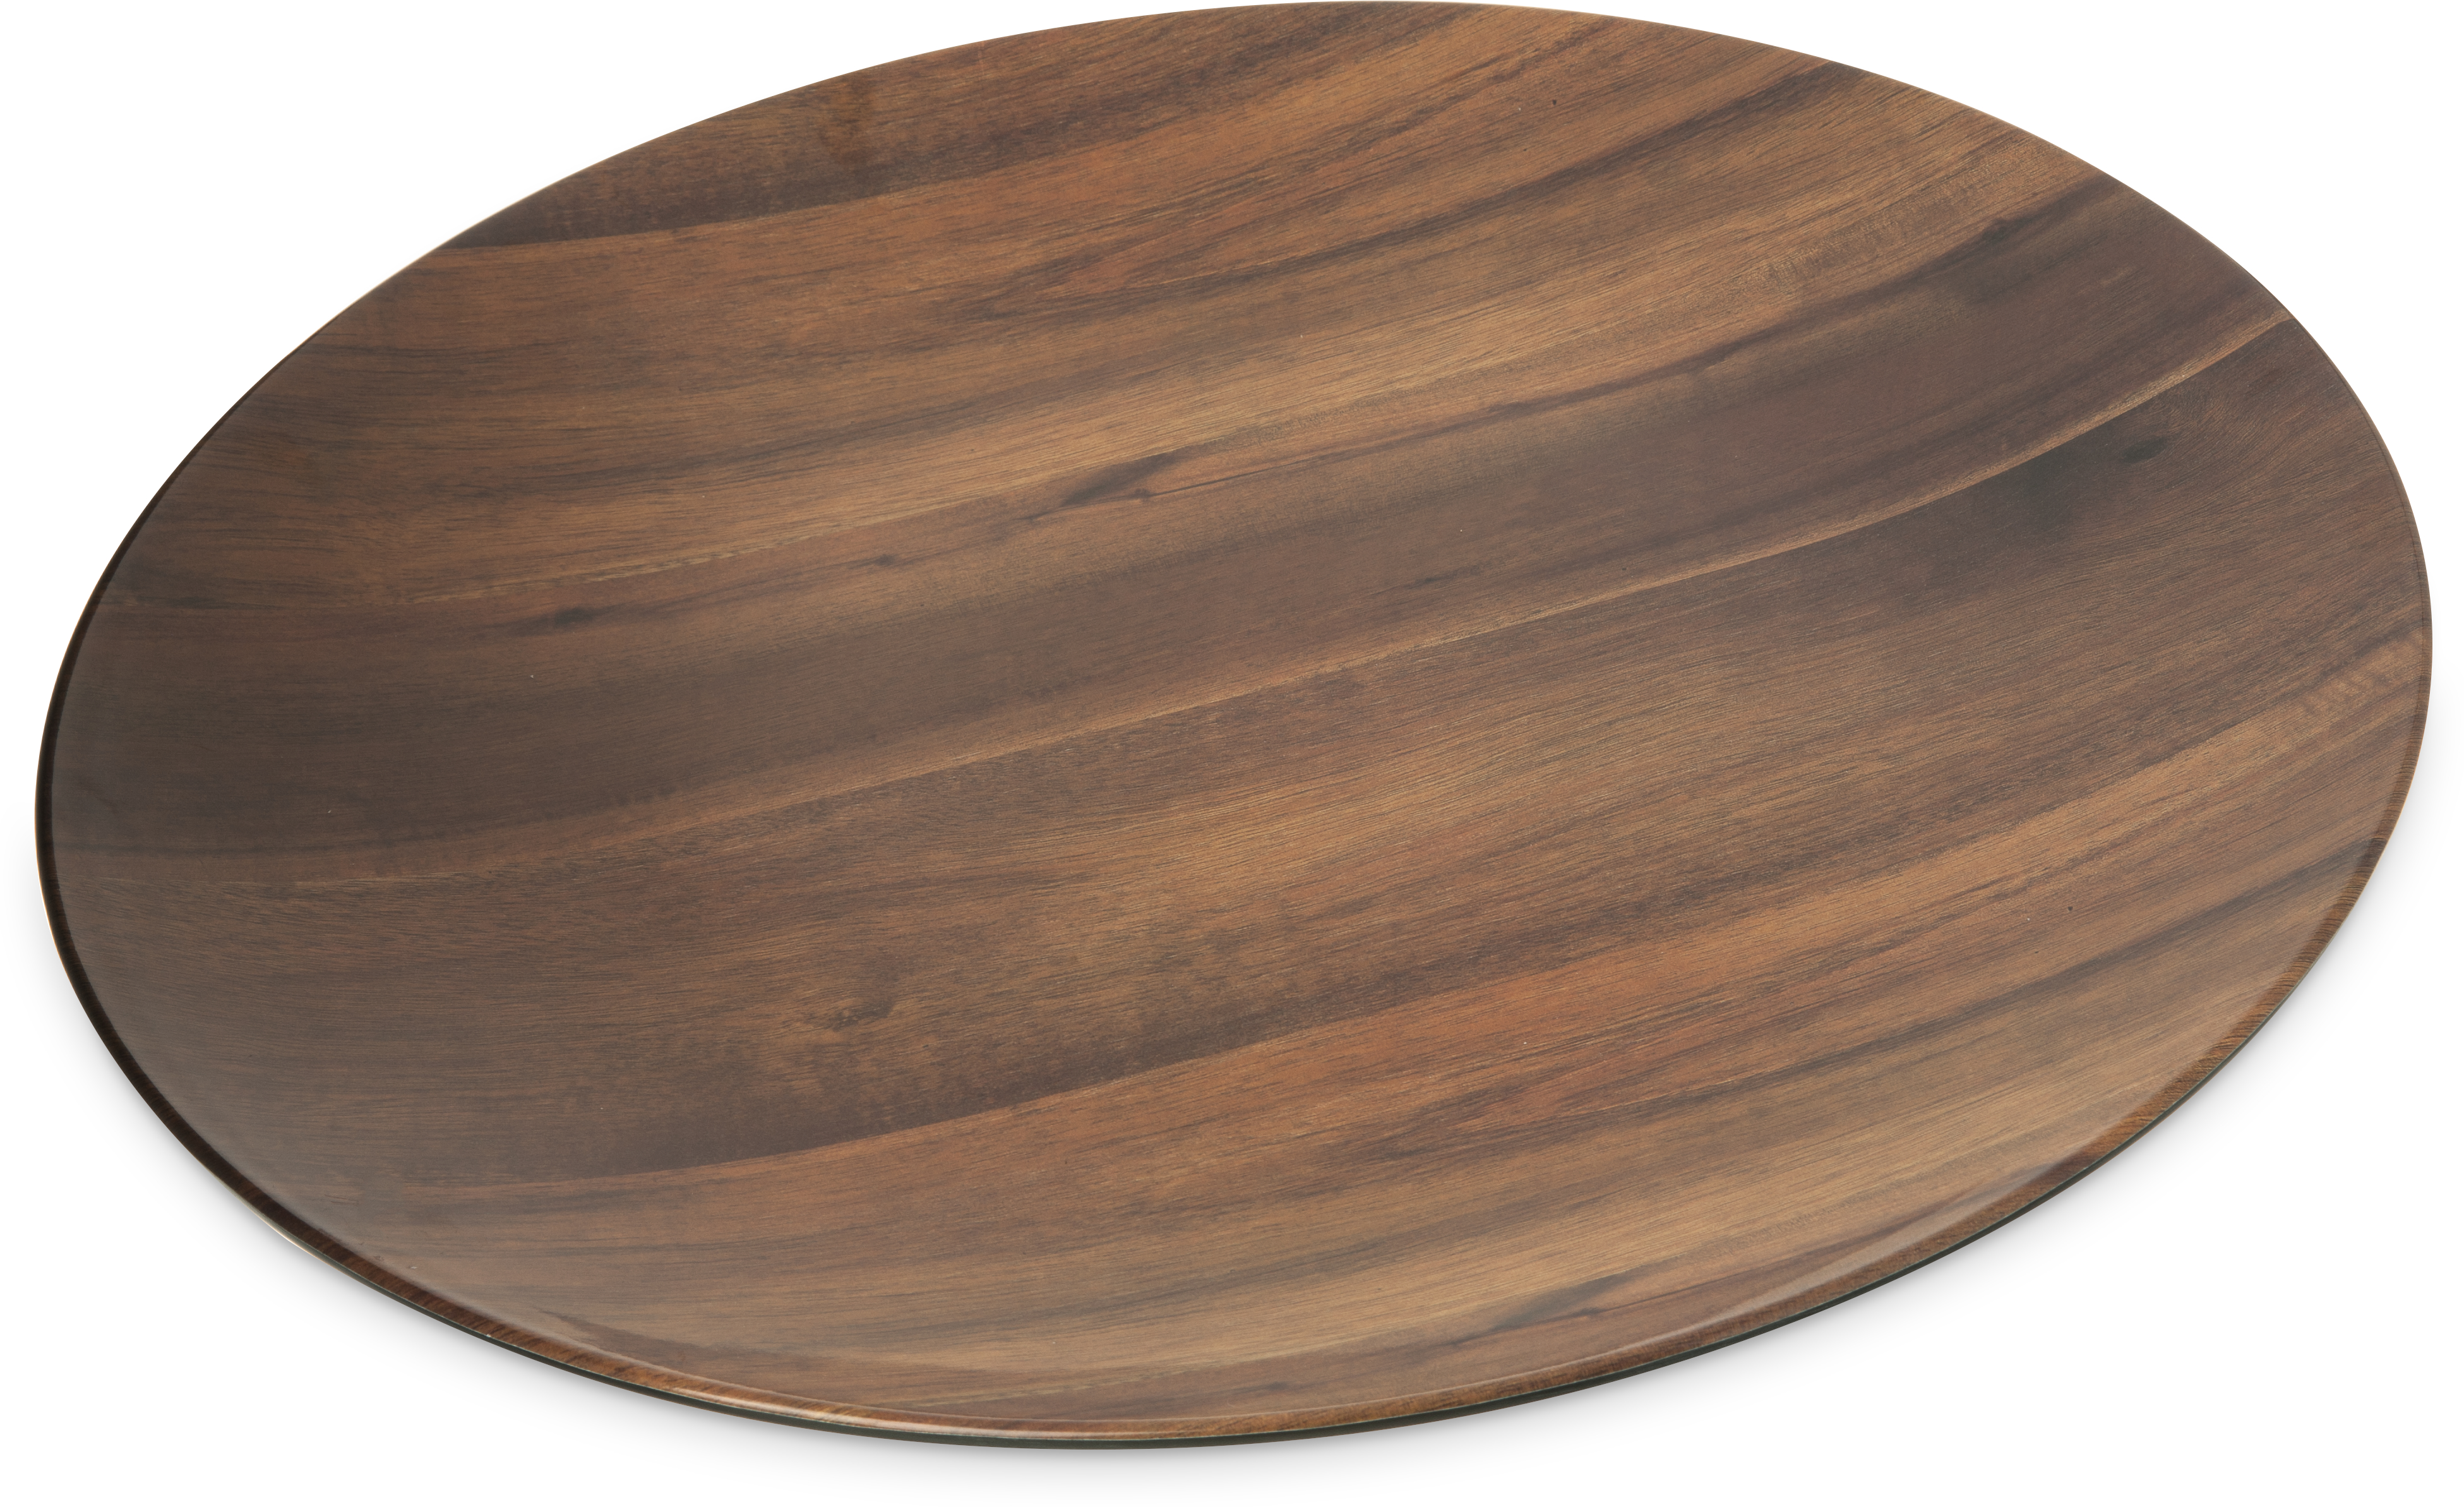 Epicure Acacia Grain Round Platter 19.25 - Dark Woodgrain